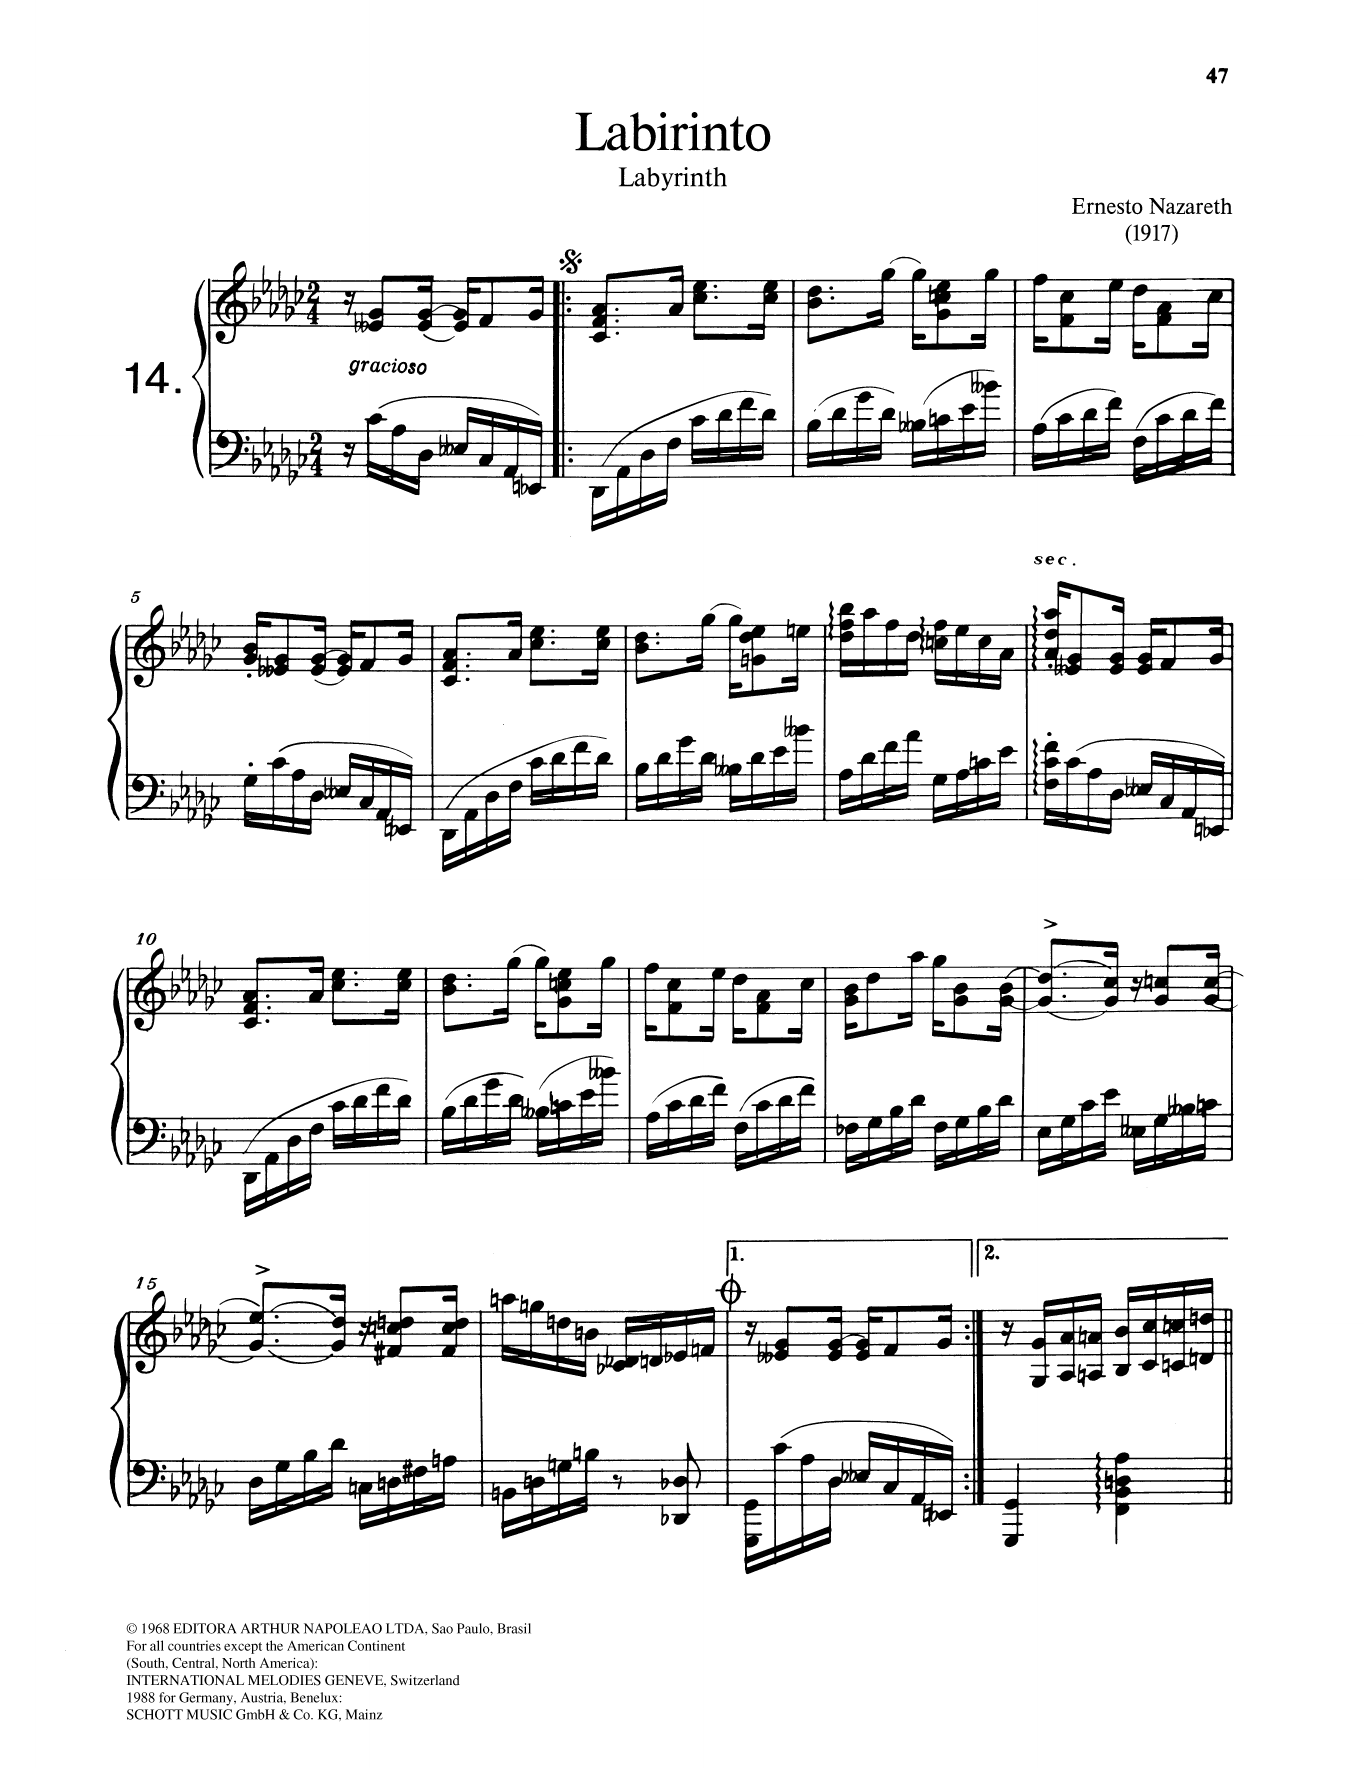 Ernesto Nazareth Labirinto Sheet Music Notes & Chords for Piano Solo - Download or Print PDF